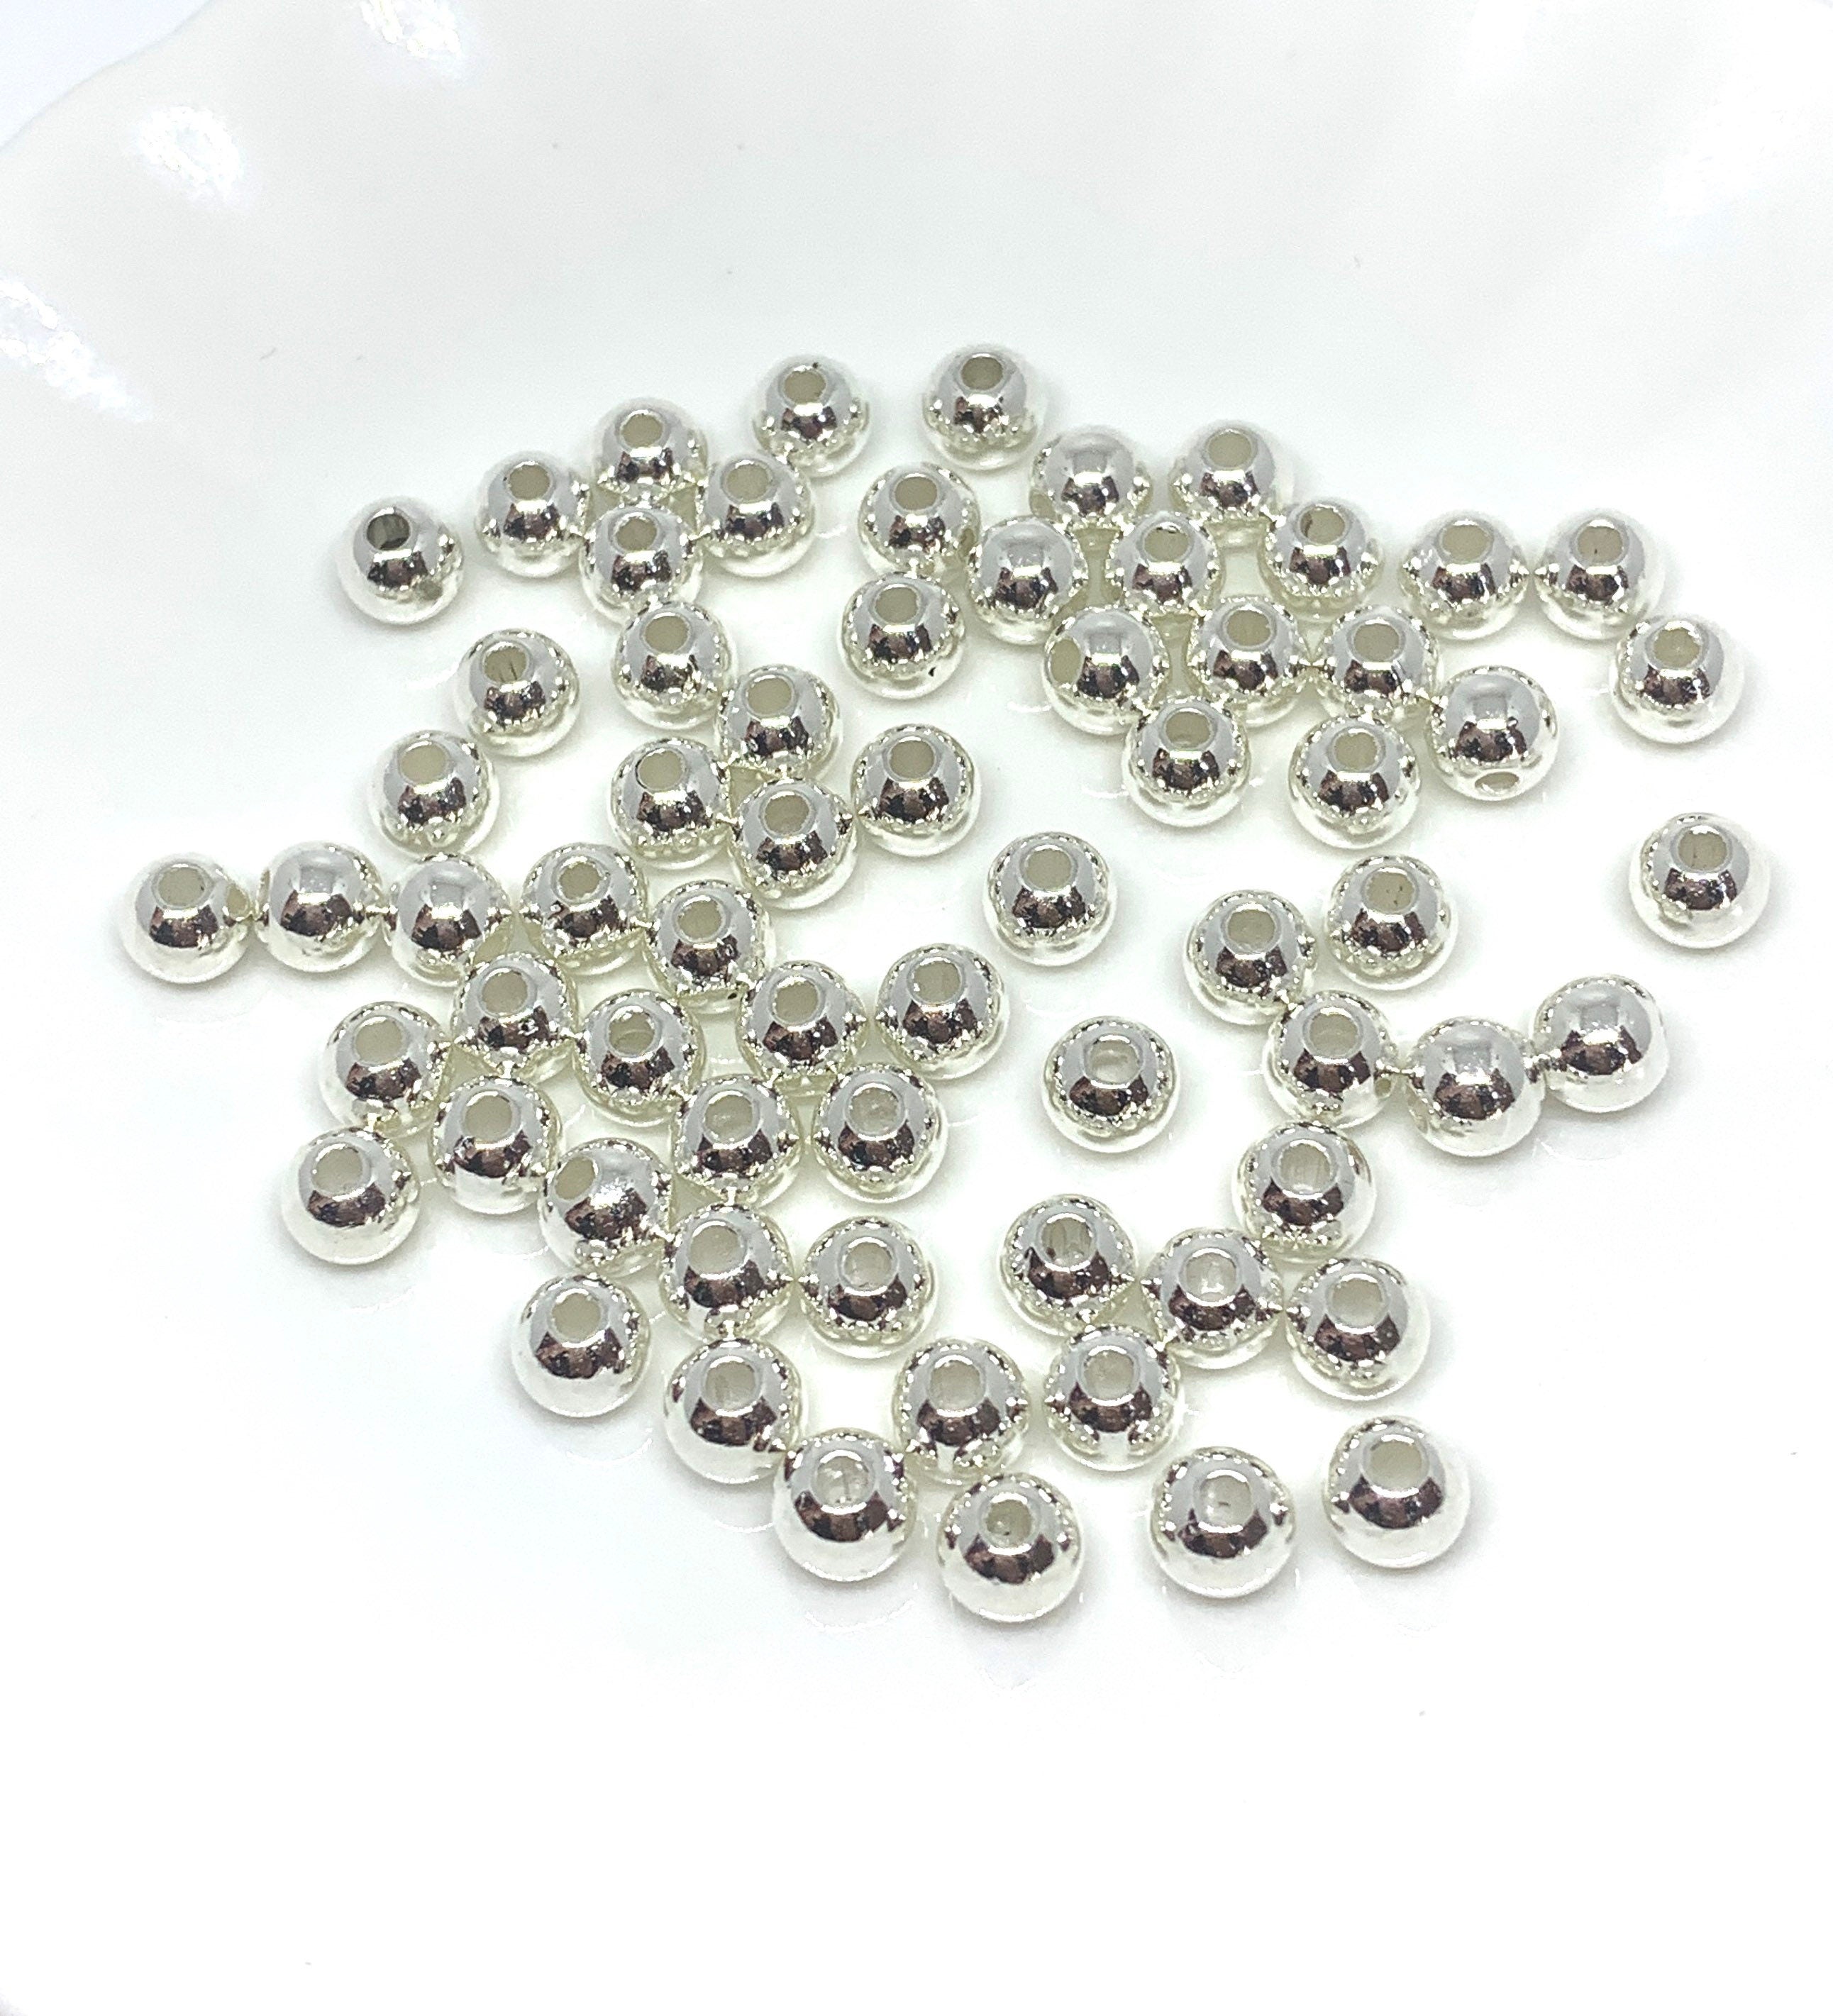 Black Iridescent Star Beads - Versatile for Halloween and Year-Round Crafts